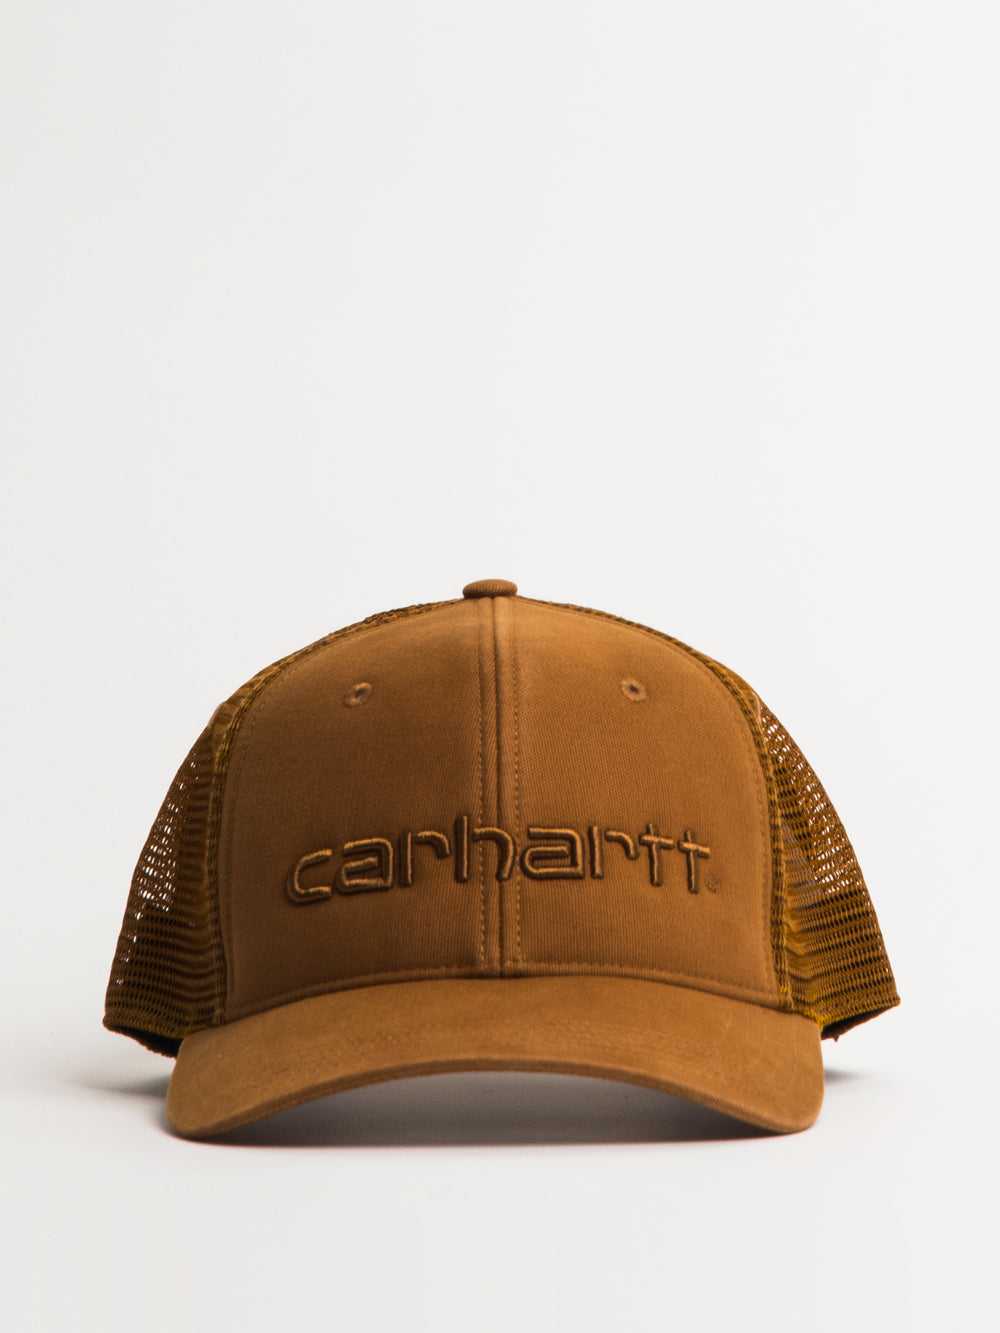 CARHARTT CANVAS MESH-BACK LOGO GRAPHIC HAT